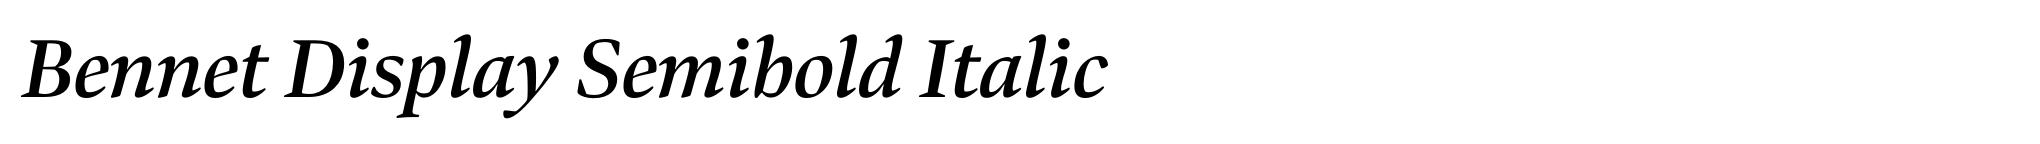 Bennet Display Semibold Italic image